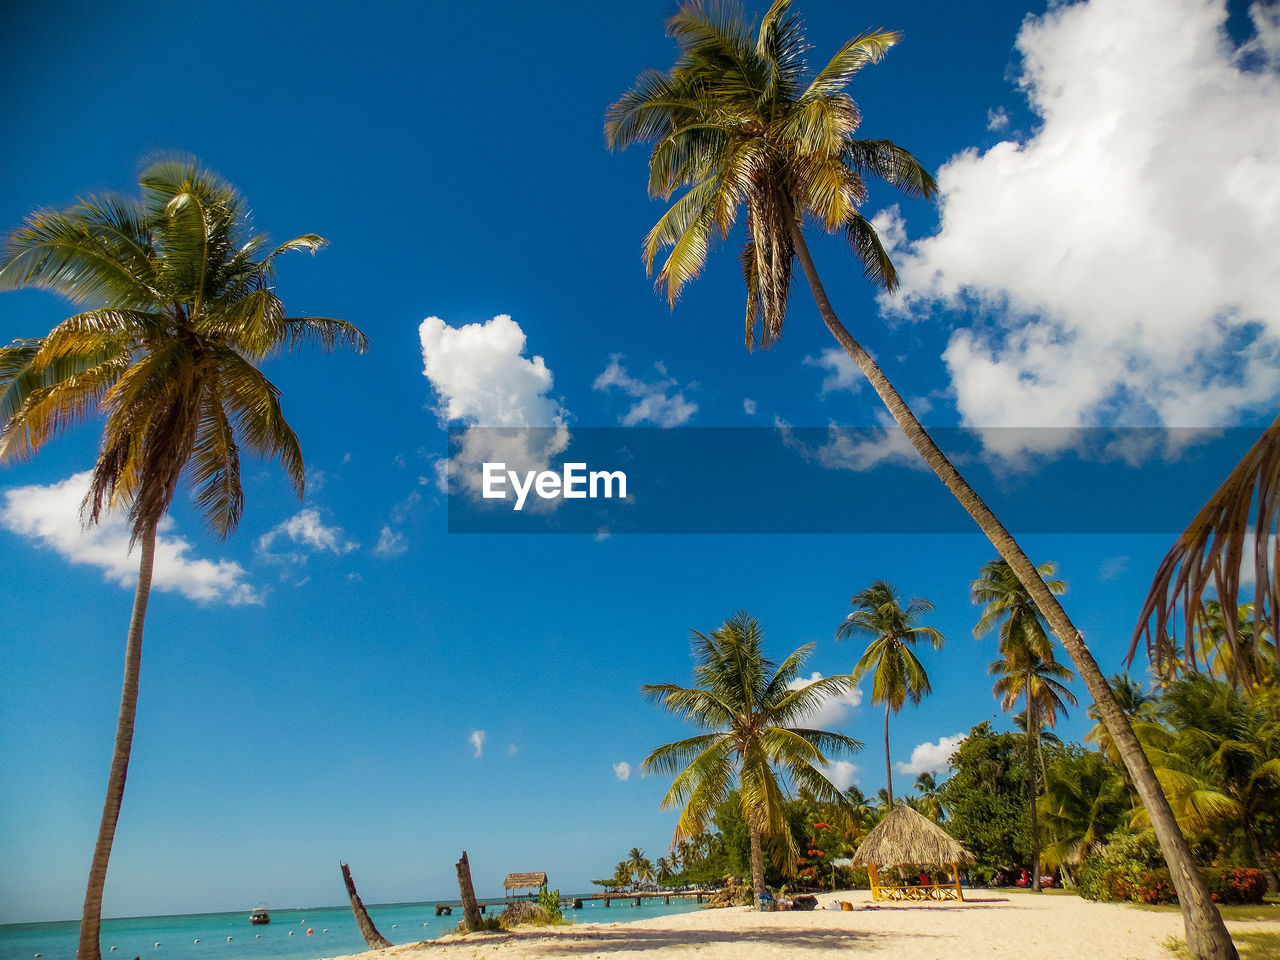 Coconut palm trees at beach against sky